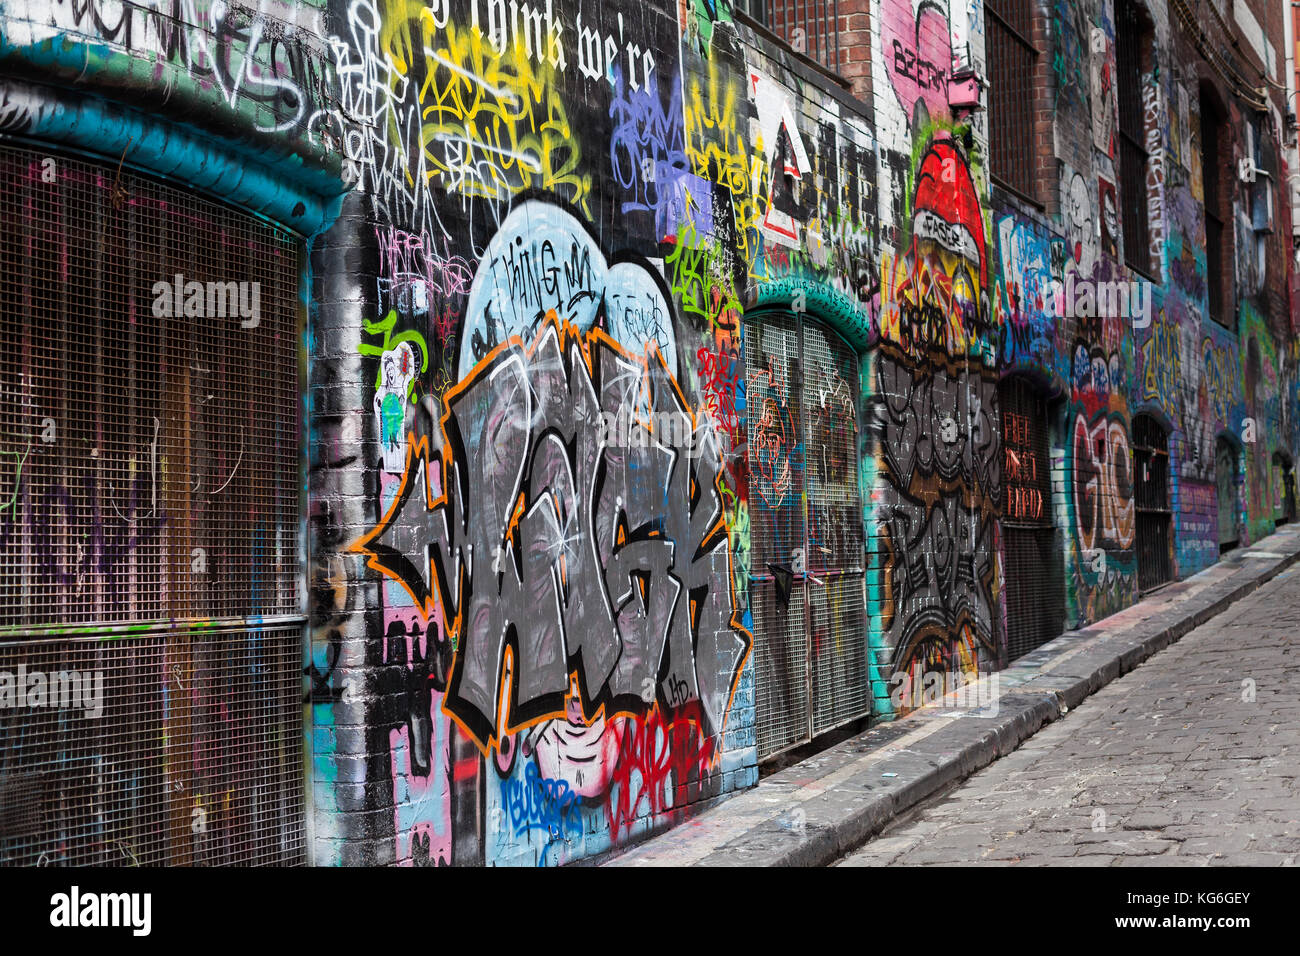 Graffiti on the iconic hosier lane in Melbourne, Australia Stock Photo